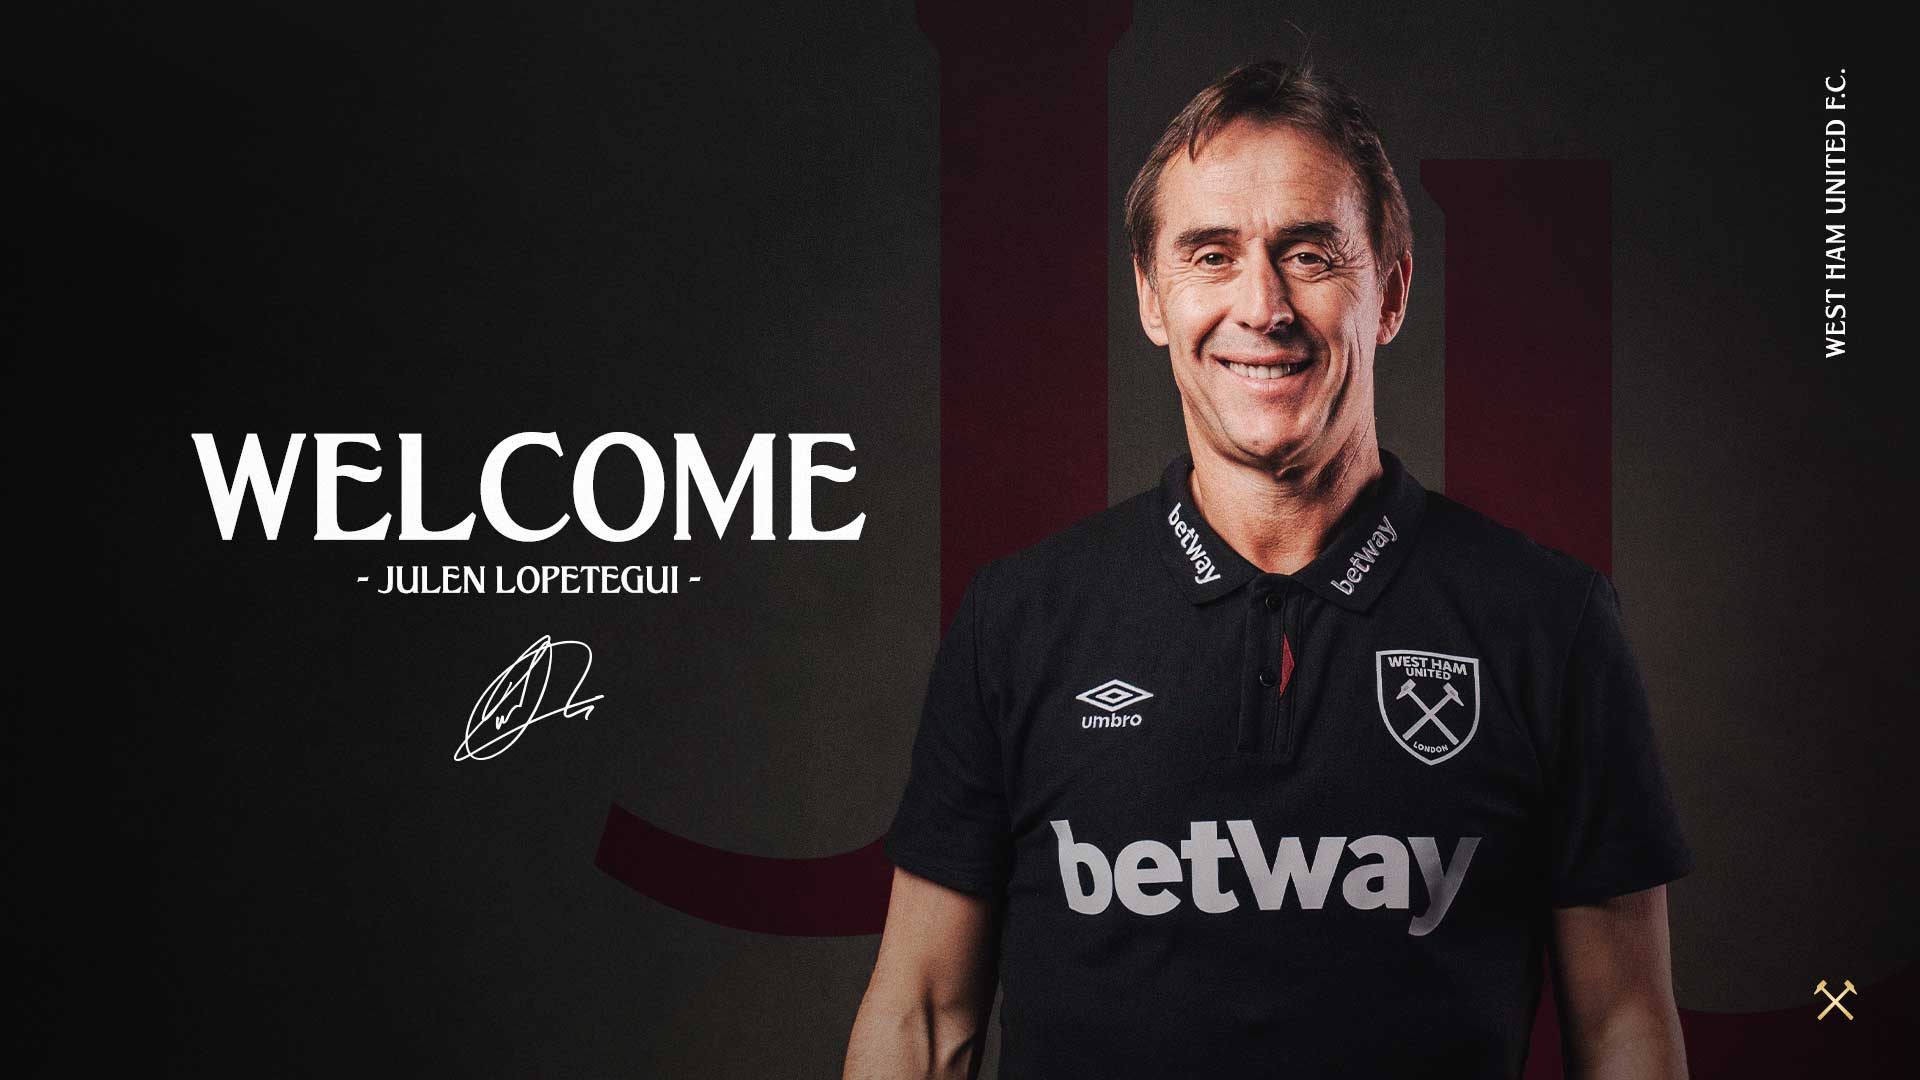 Julen Lopetegui appointed West Ham United Head Coach | West Ham United F.C.